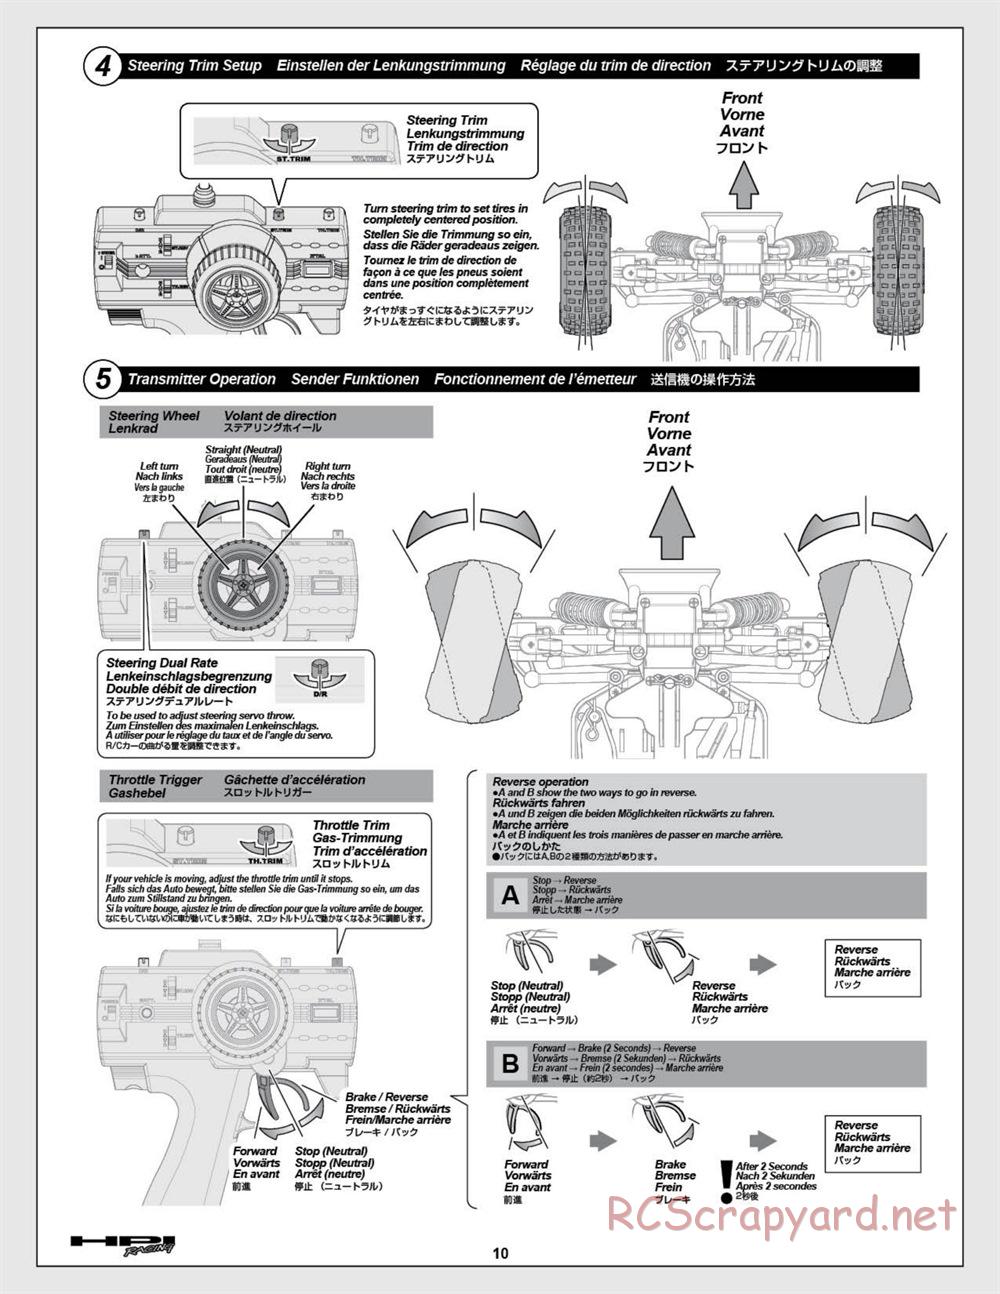 HPI - Brama 18B - Manual - Page 10